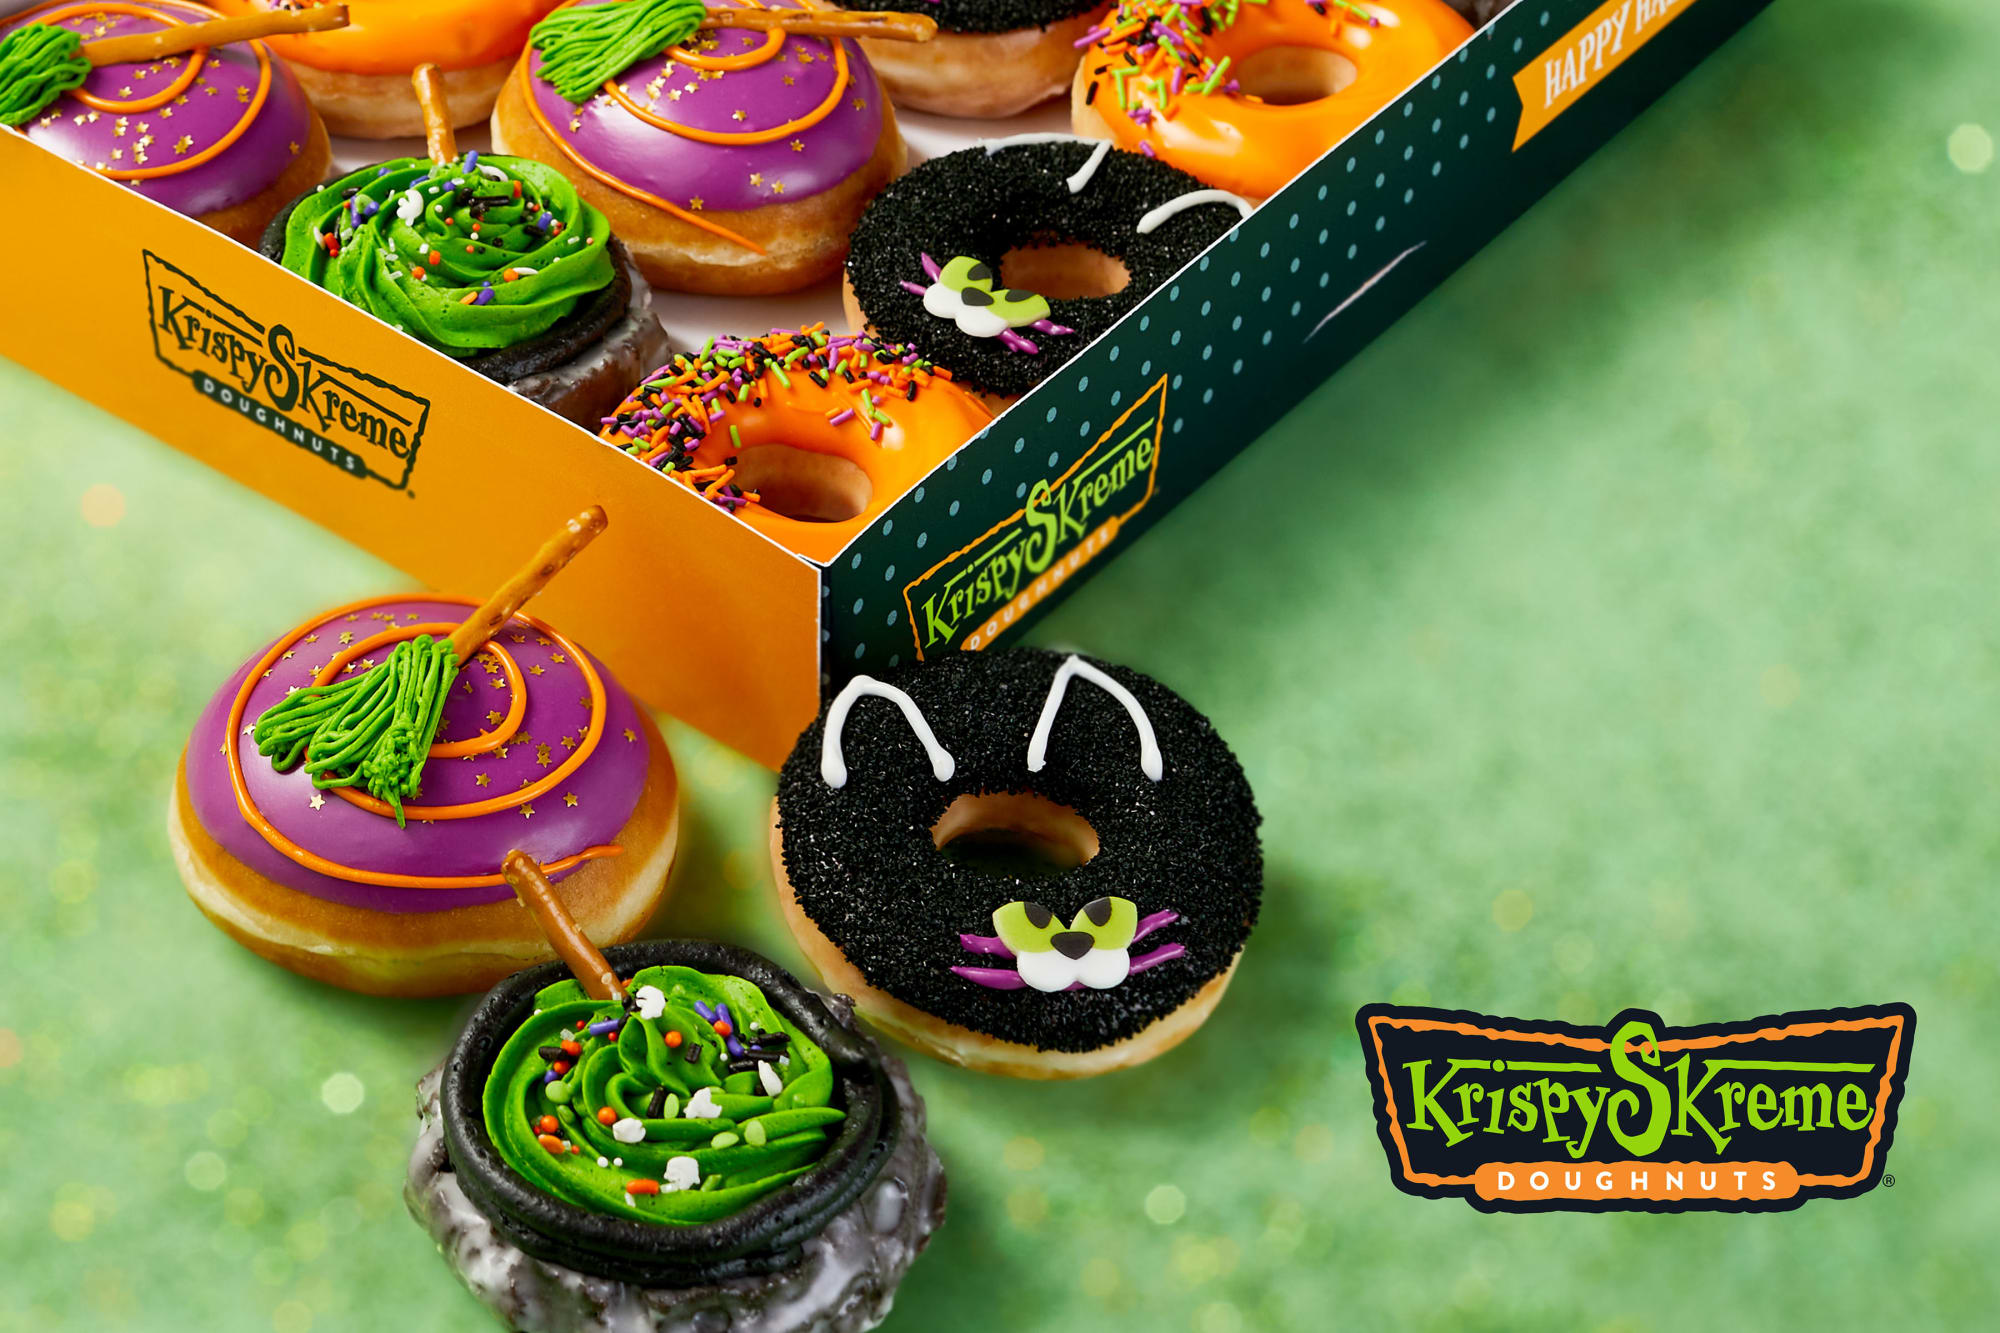 Krispy Kreme adds four new Halloween doughnuts